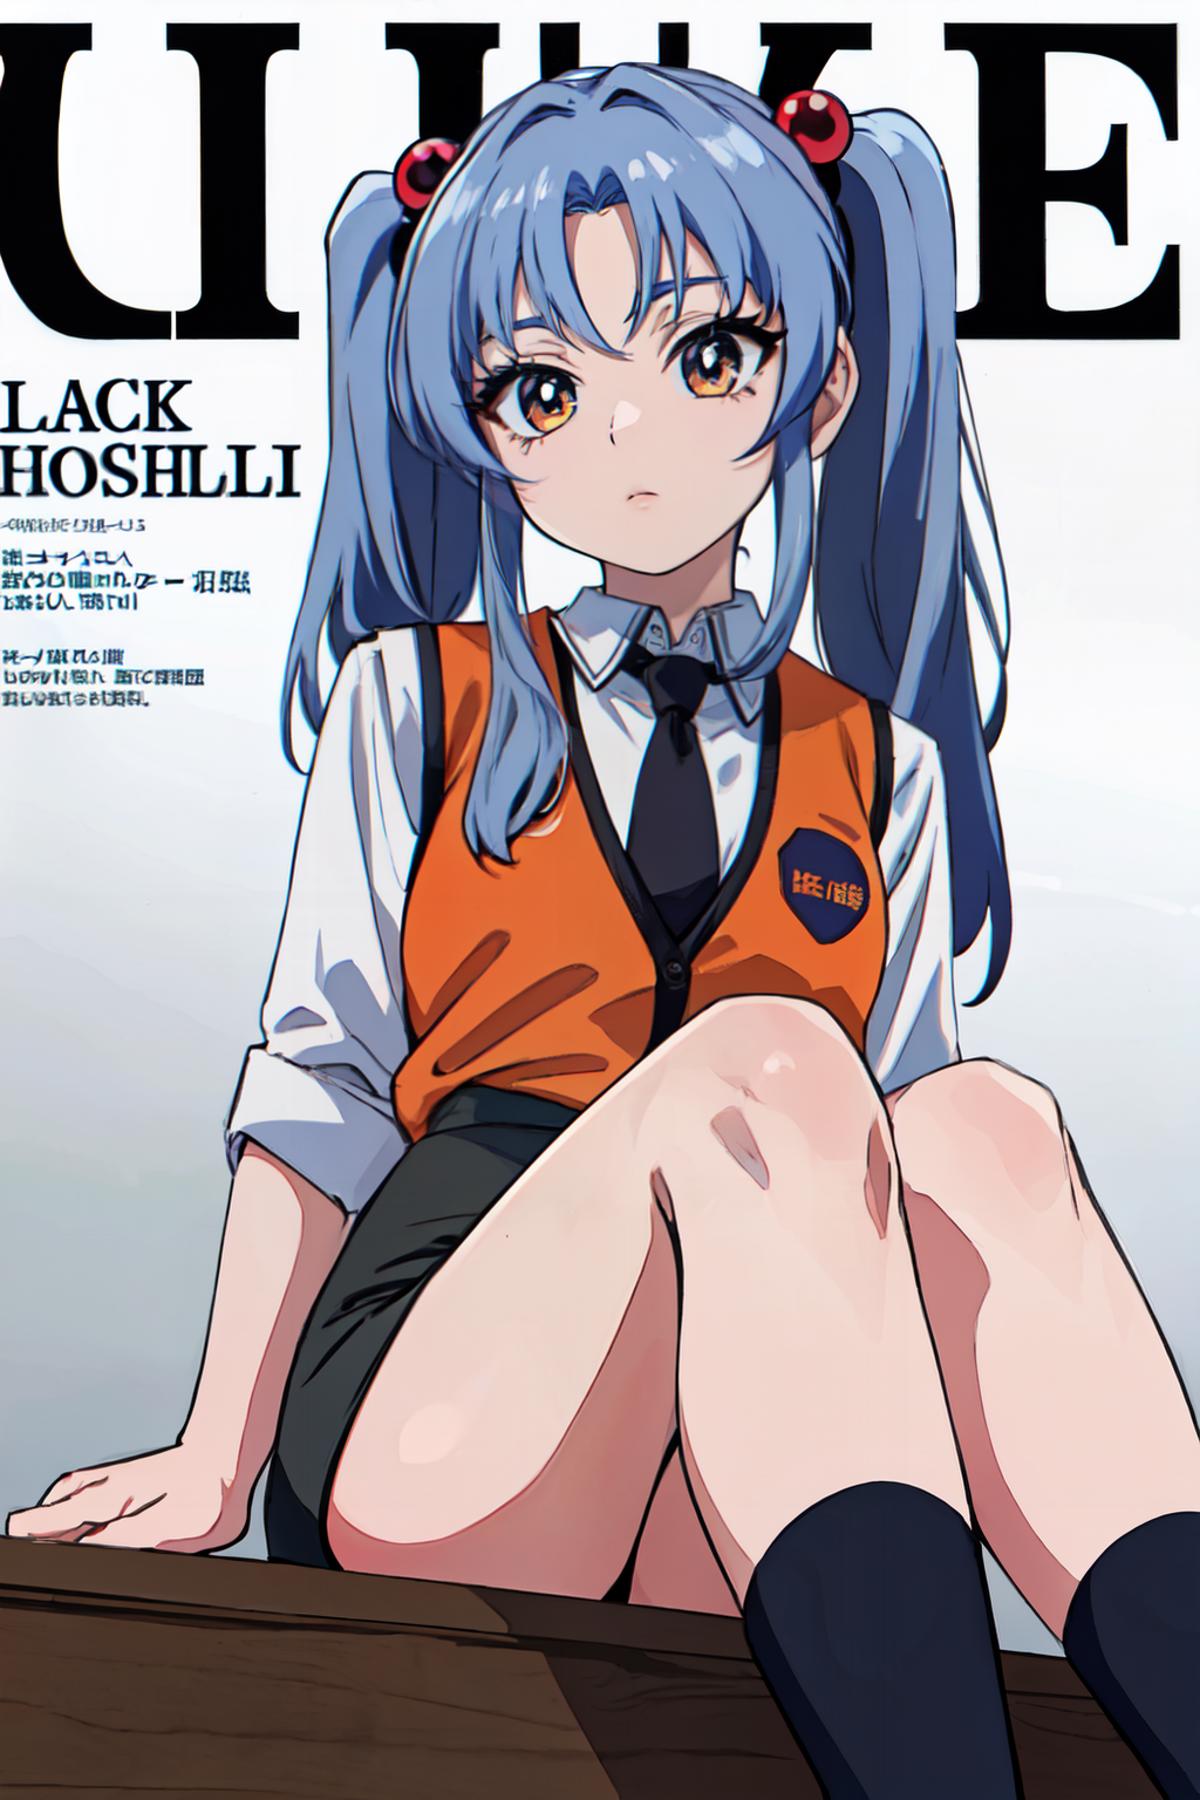 Anime Magazine Cover image by kokurine